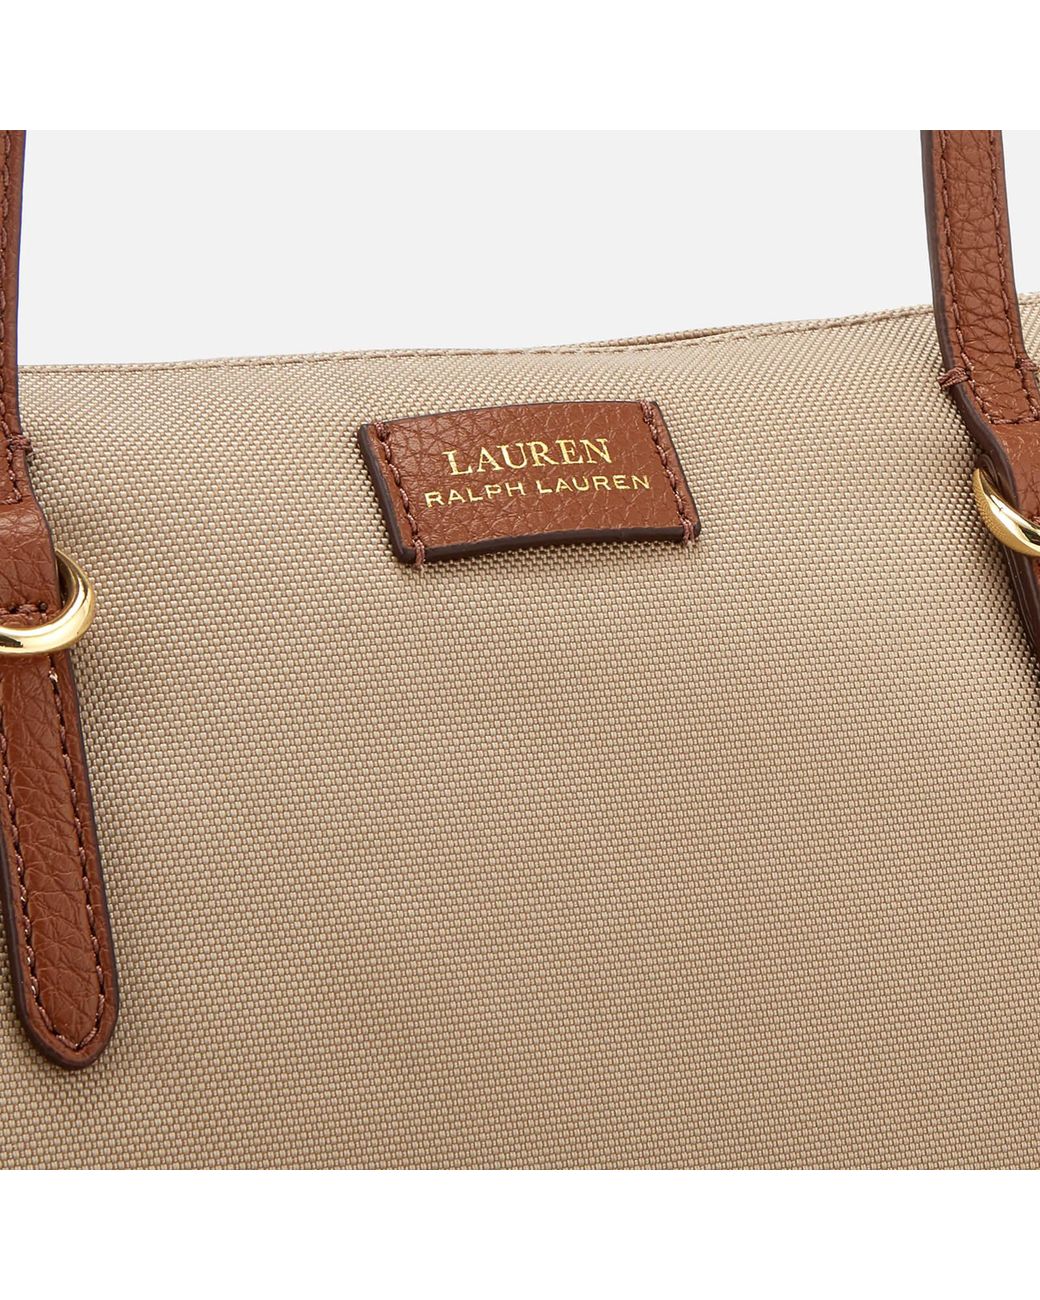 Lauren by Ralph Lauren Chadwick Shopper Bag in Natural | Lyst Australia